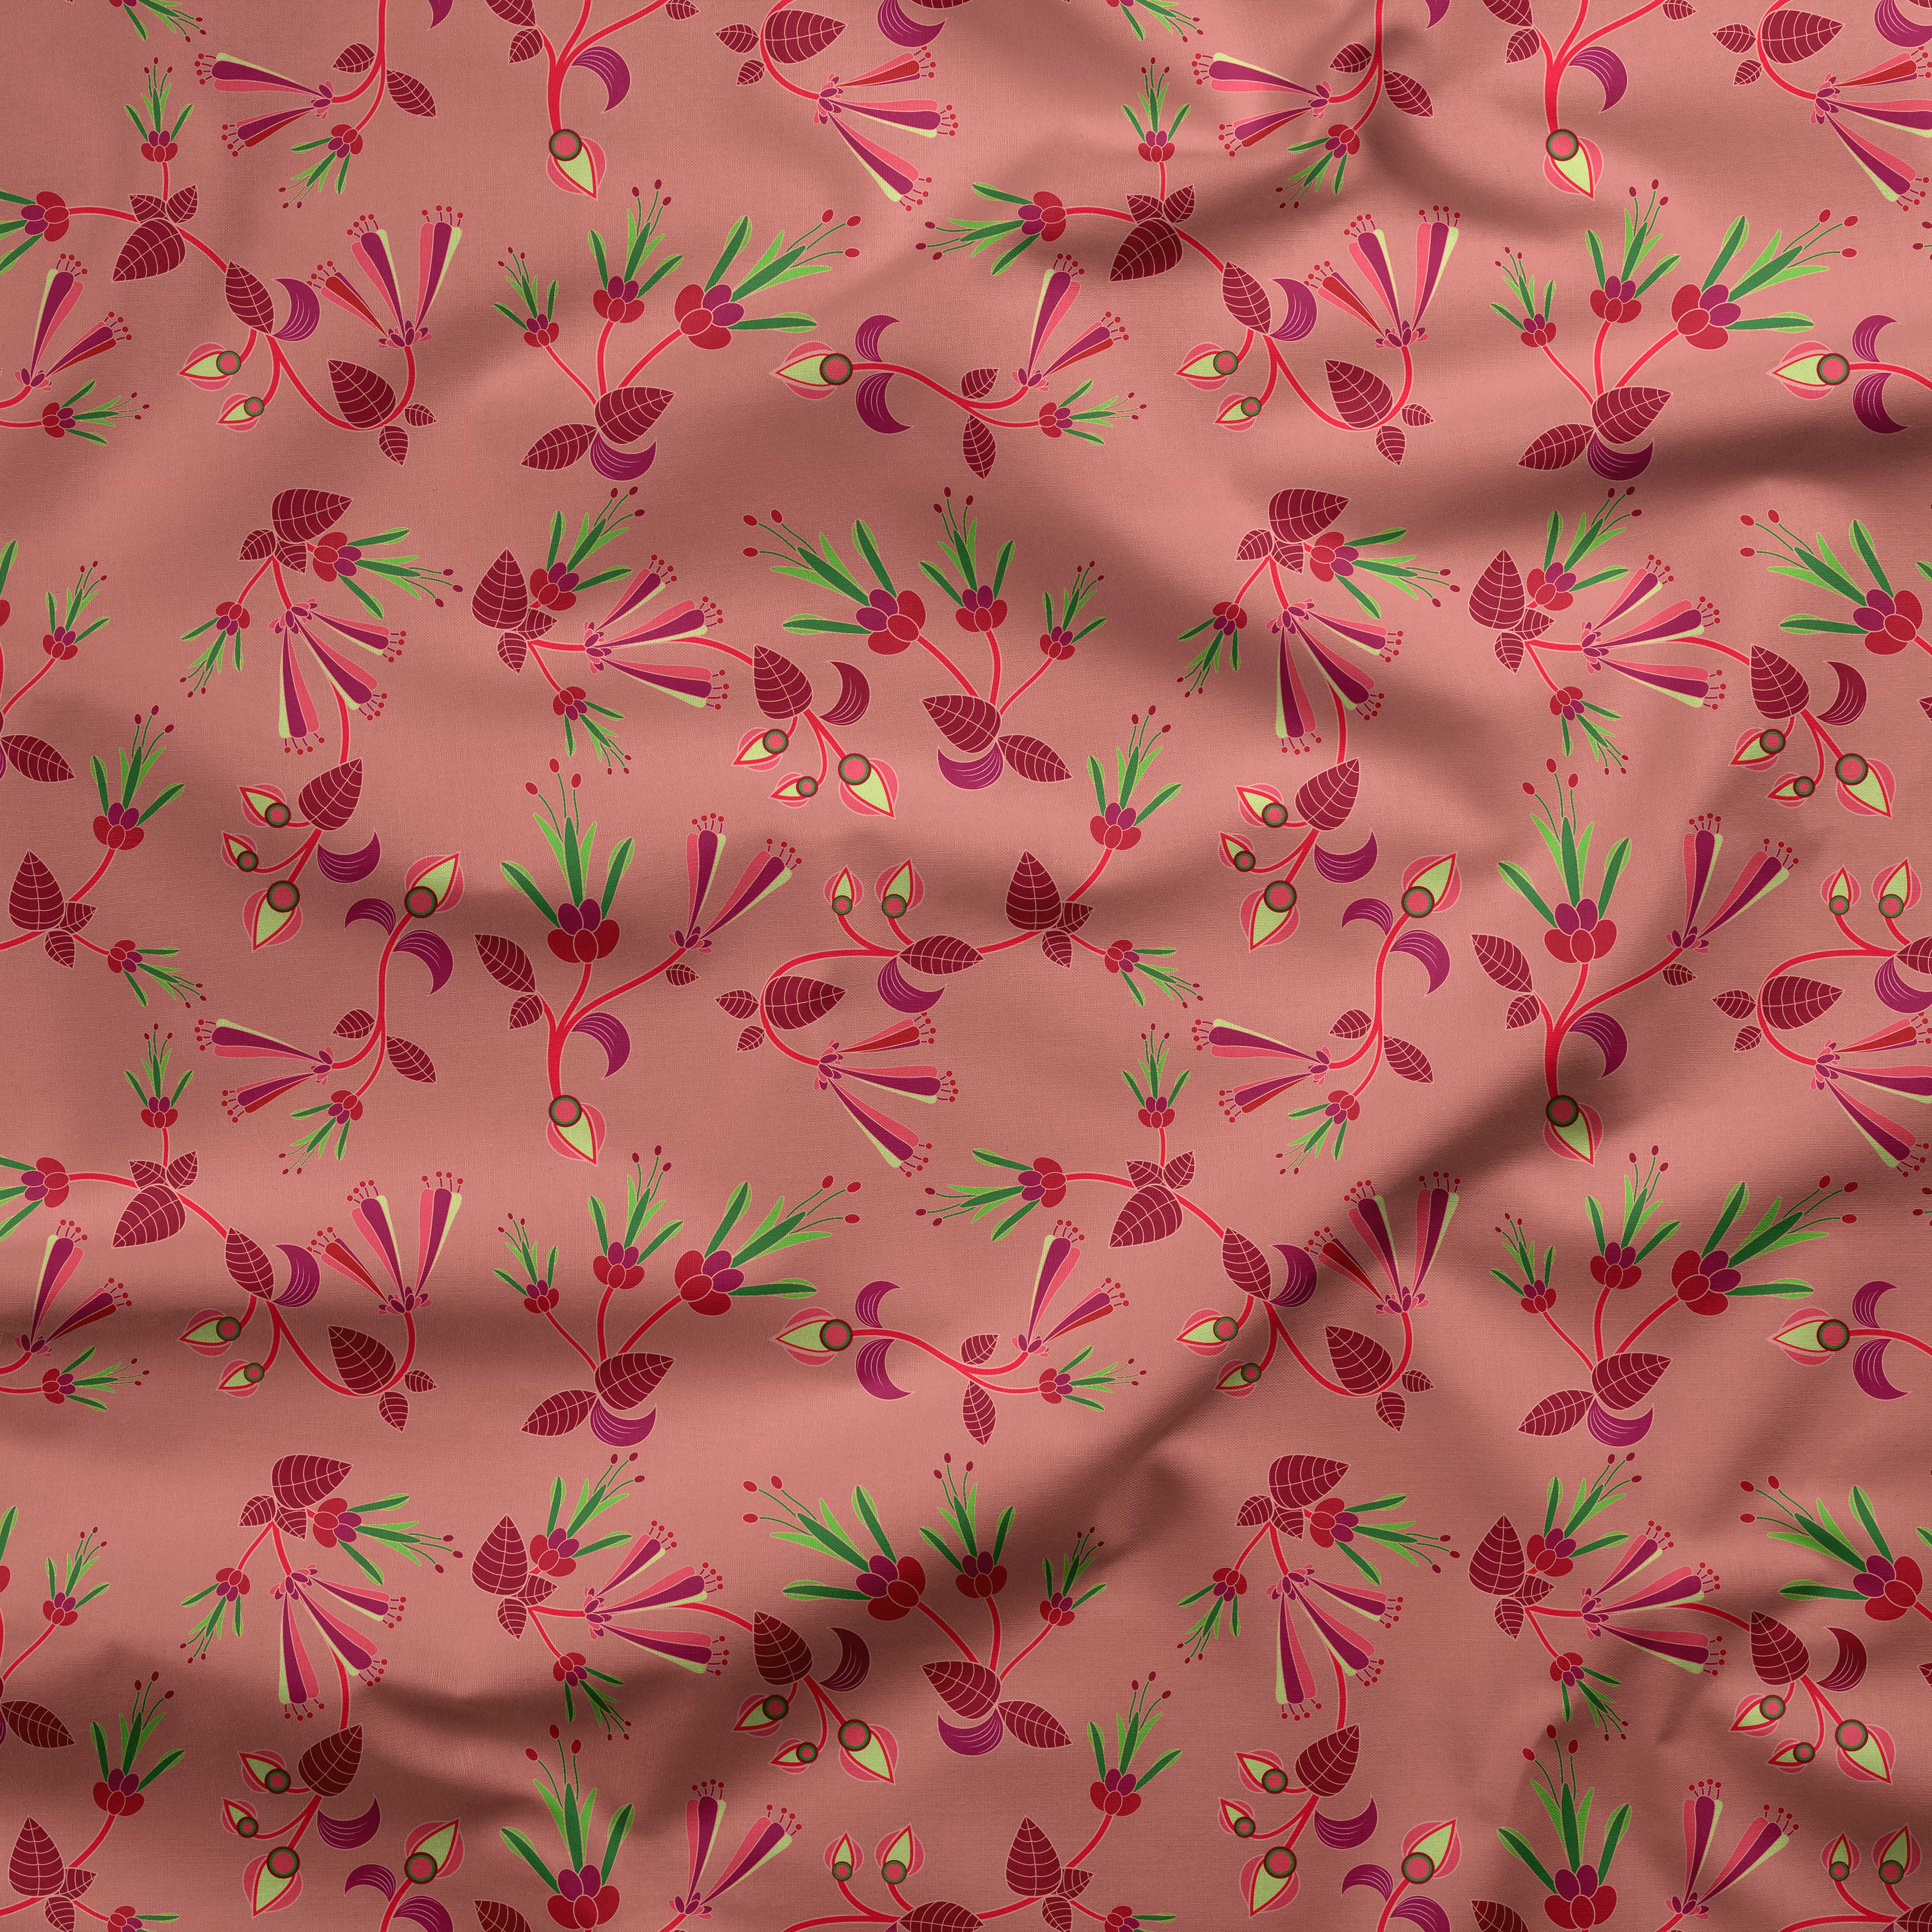 Swift Floral Peach Rouge Remix Cotton Poplin Fabric By the Yard Fabric NBprintex 